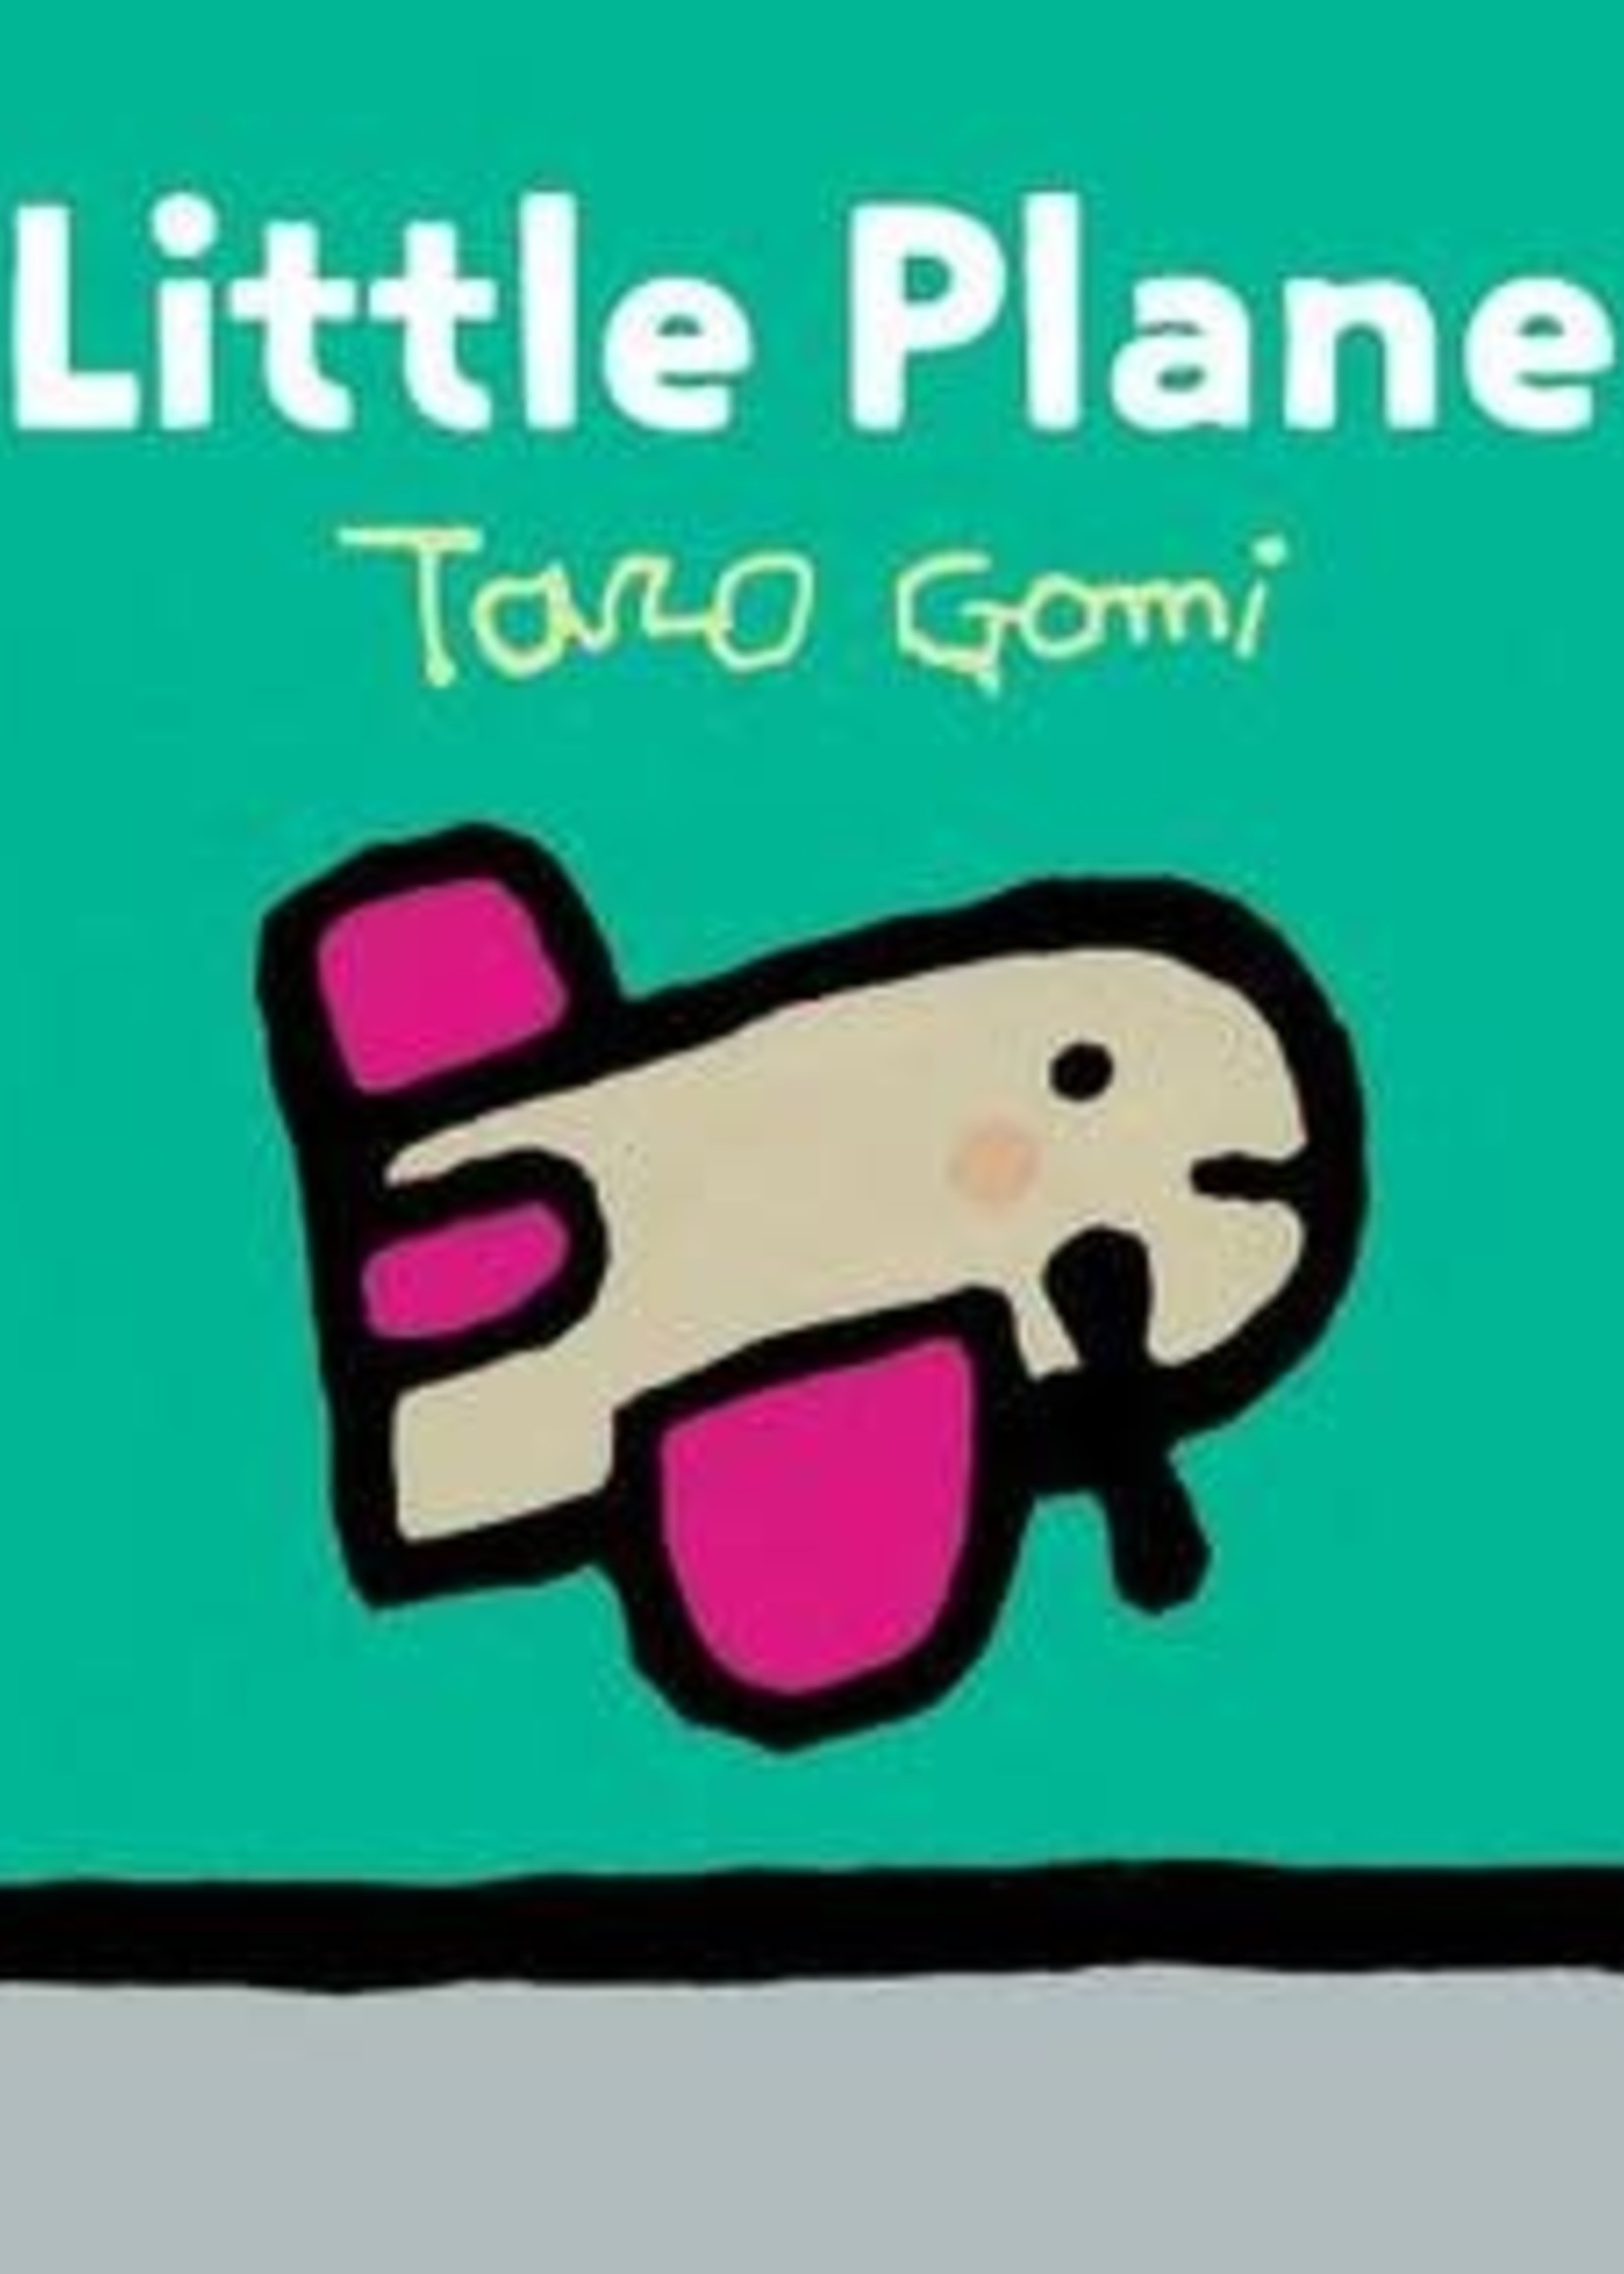 Little Plane by Taro Gomi